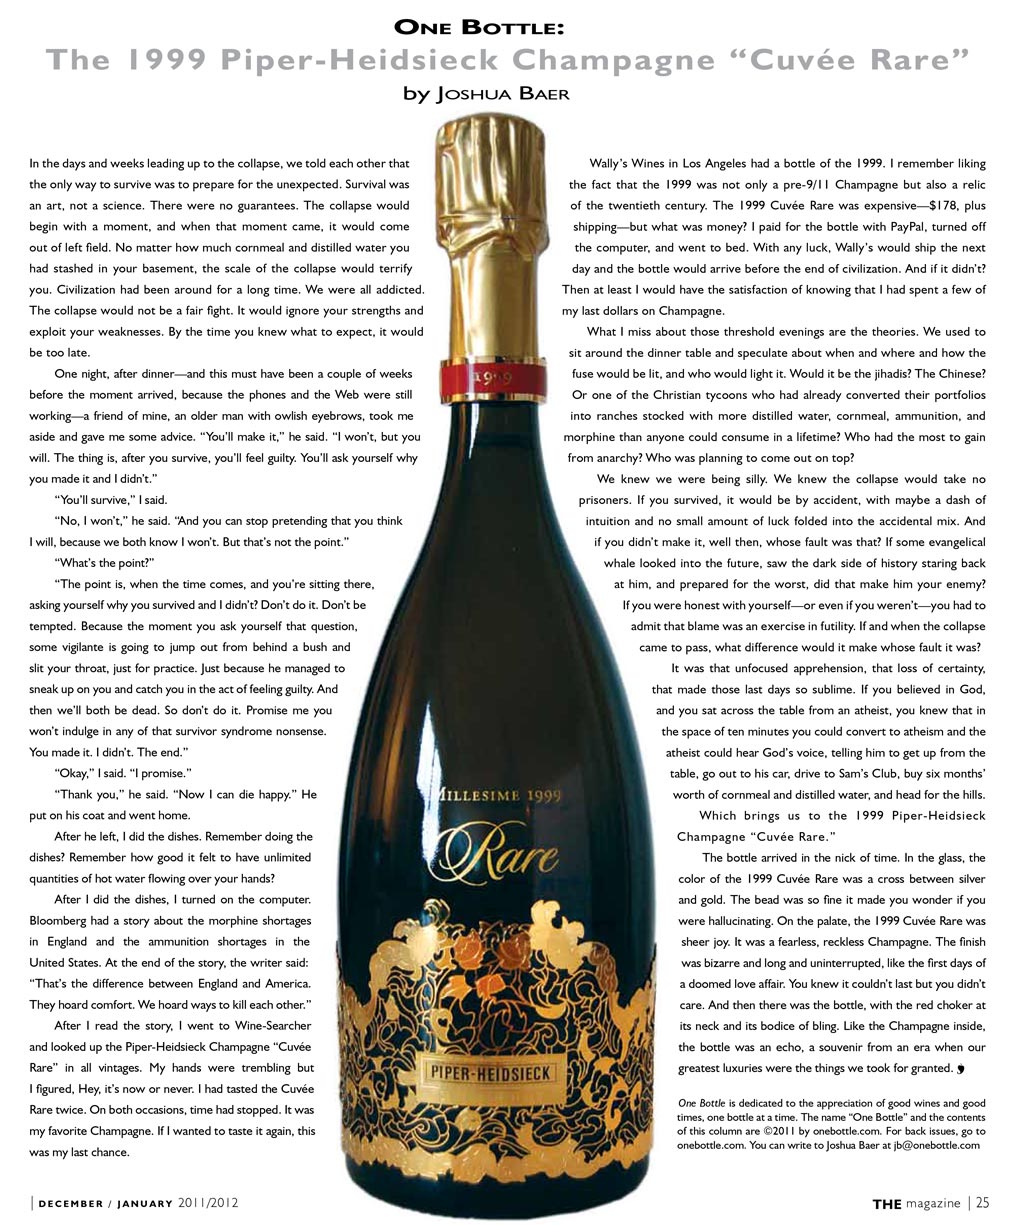 1999 Piper-Heidsieck Champagne Cuvée Rare